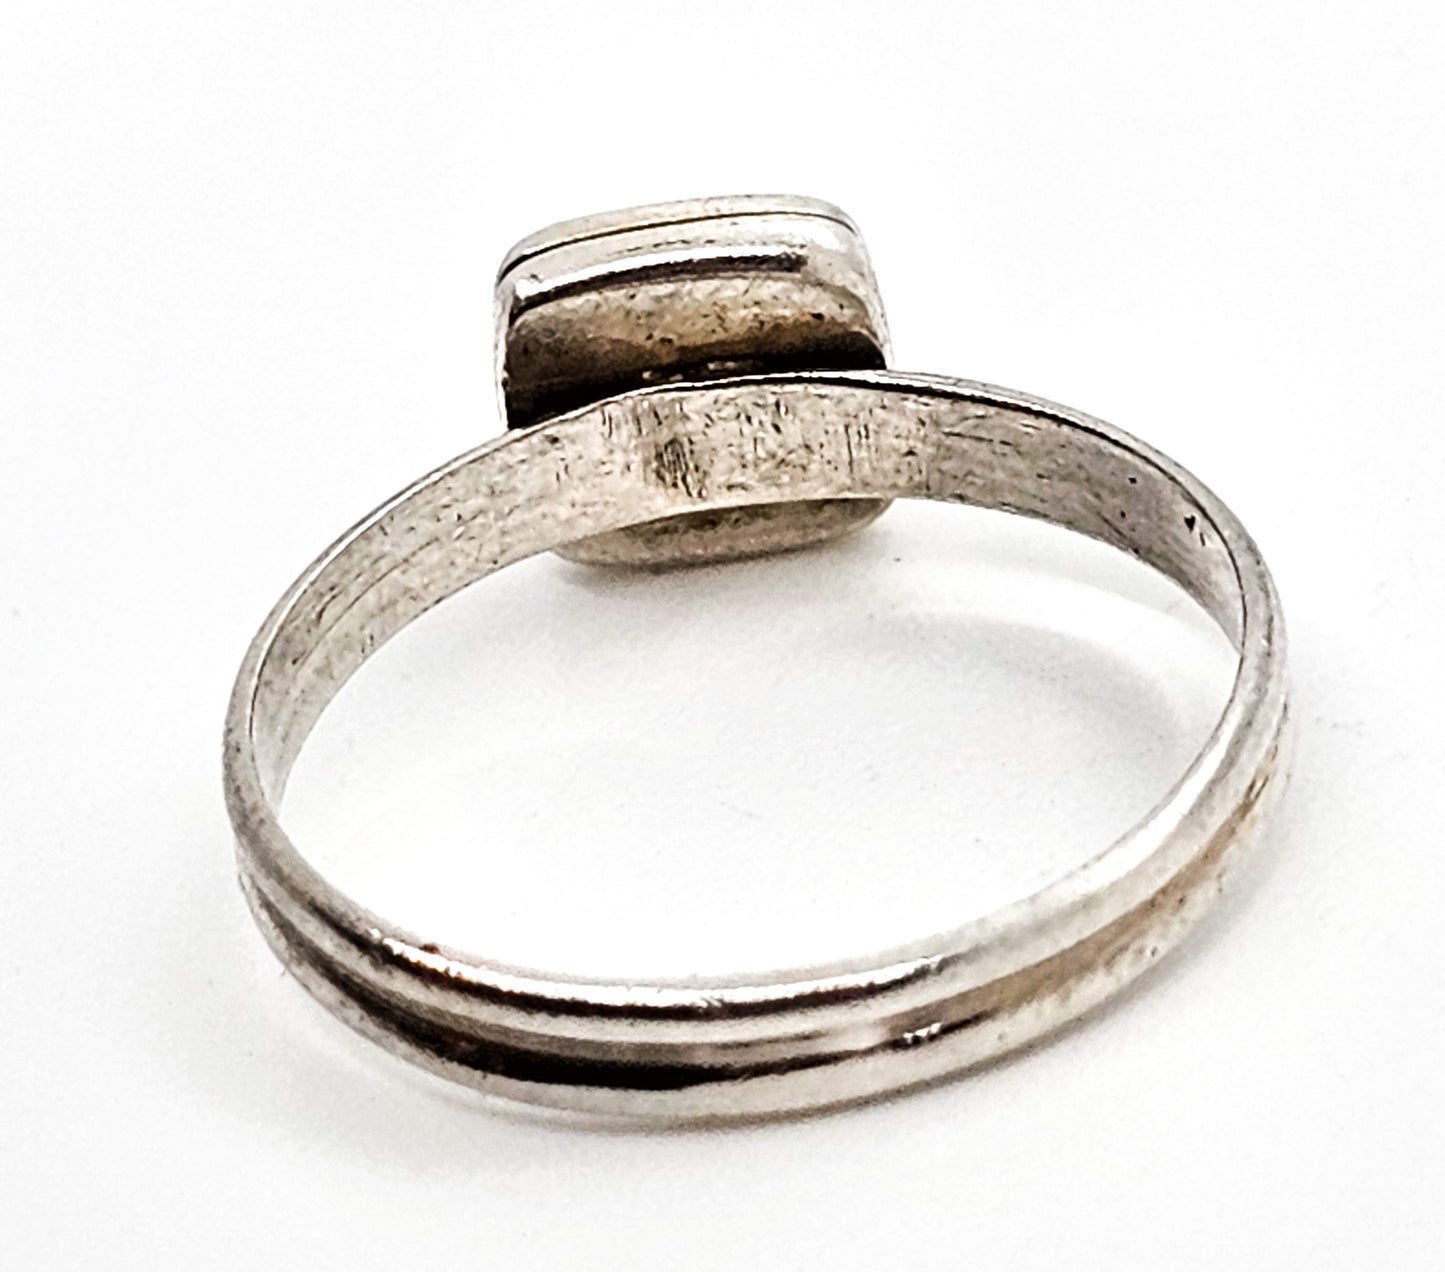 Labradorite small flashy rainbow  princess cut sterling silver gemstone ring size 7